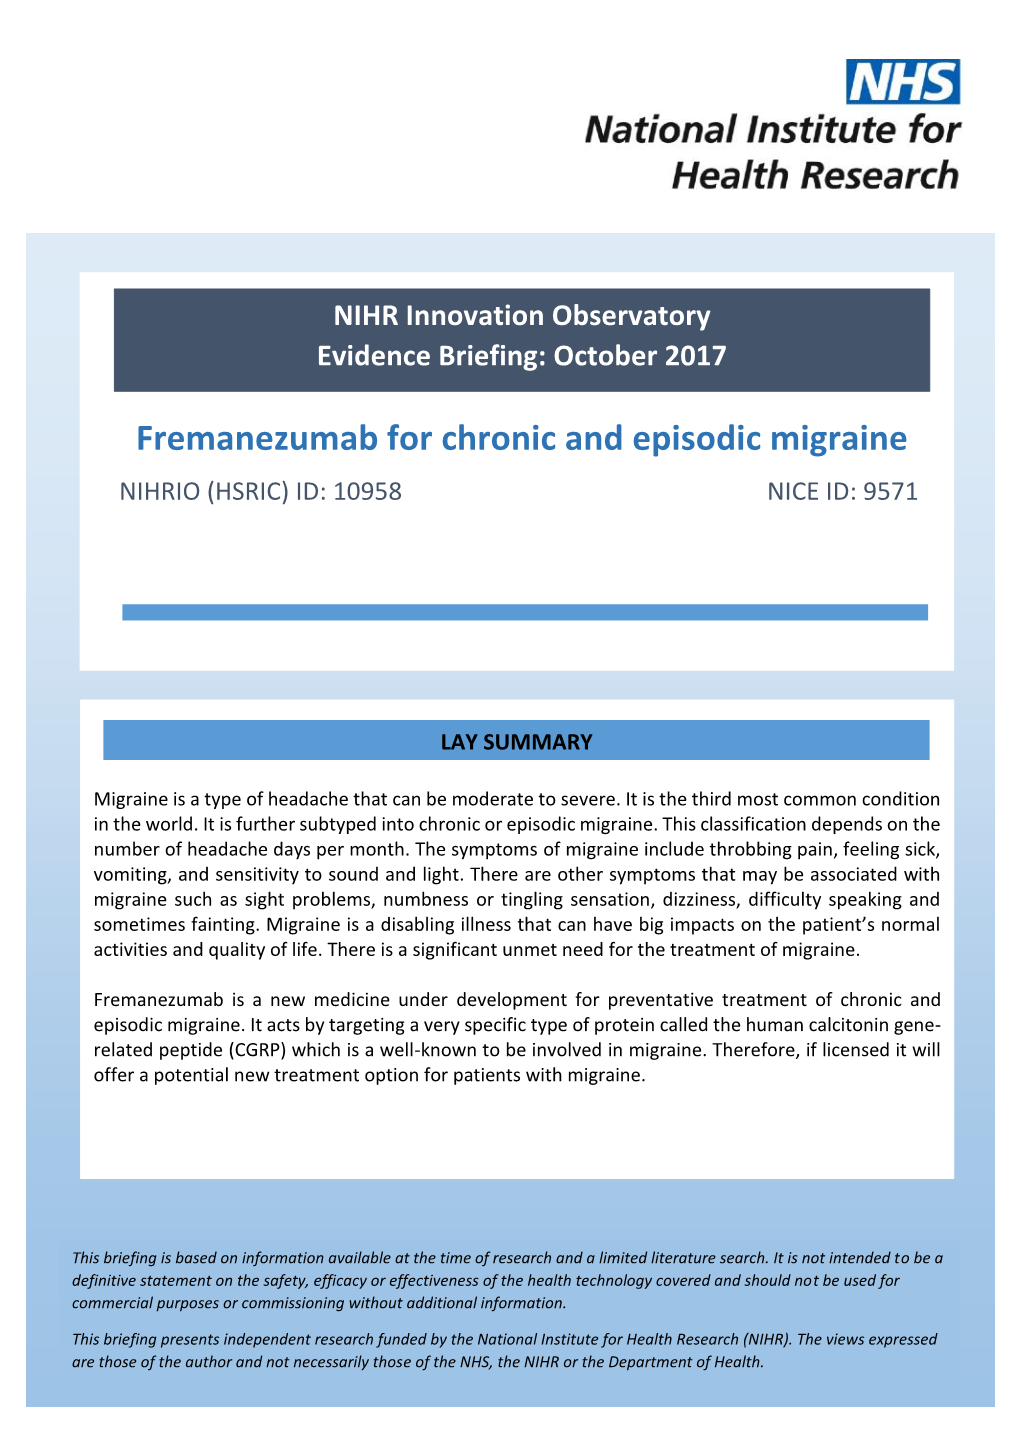 Fremanezumab for Chronic and Episodic Migraine NIHRIO (HSRIC) ID: 10958 NICE ID: 9571